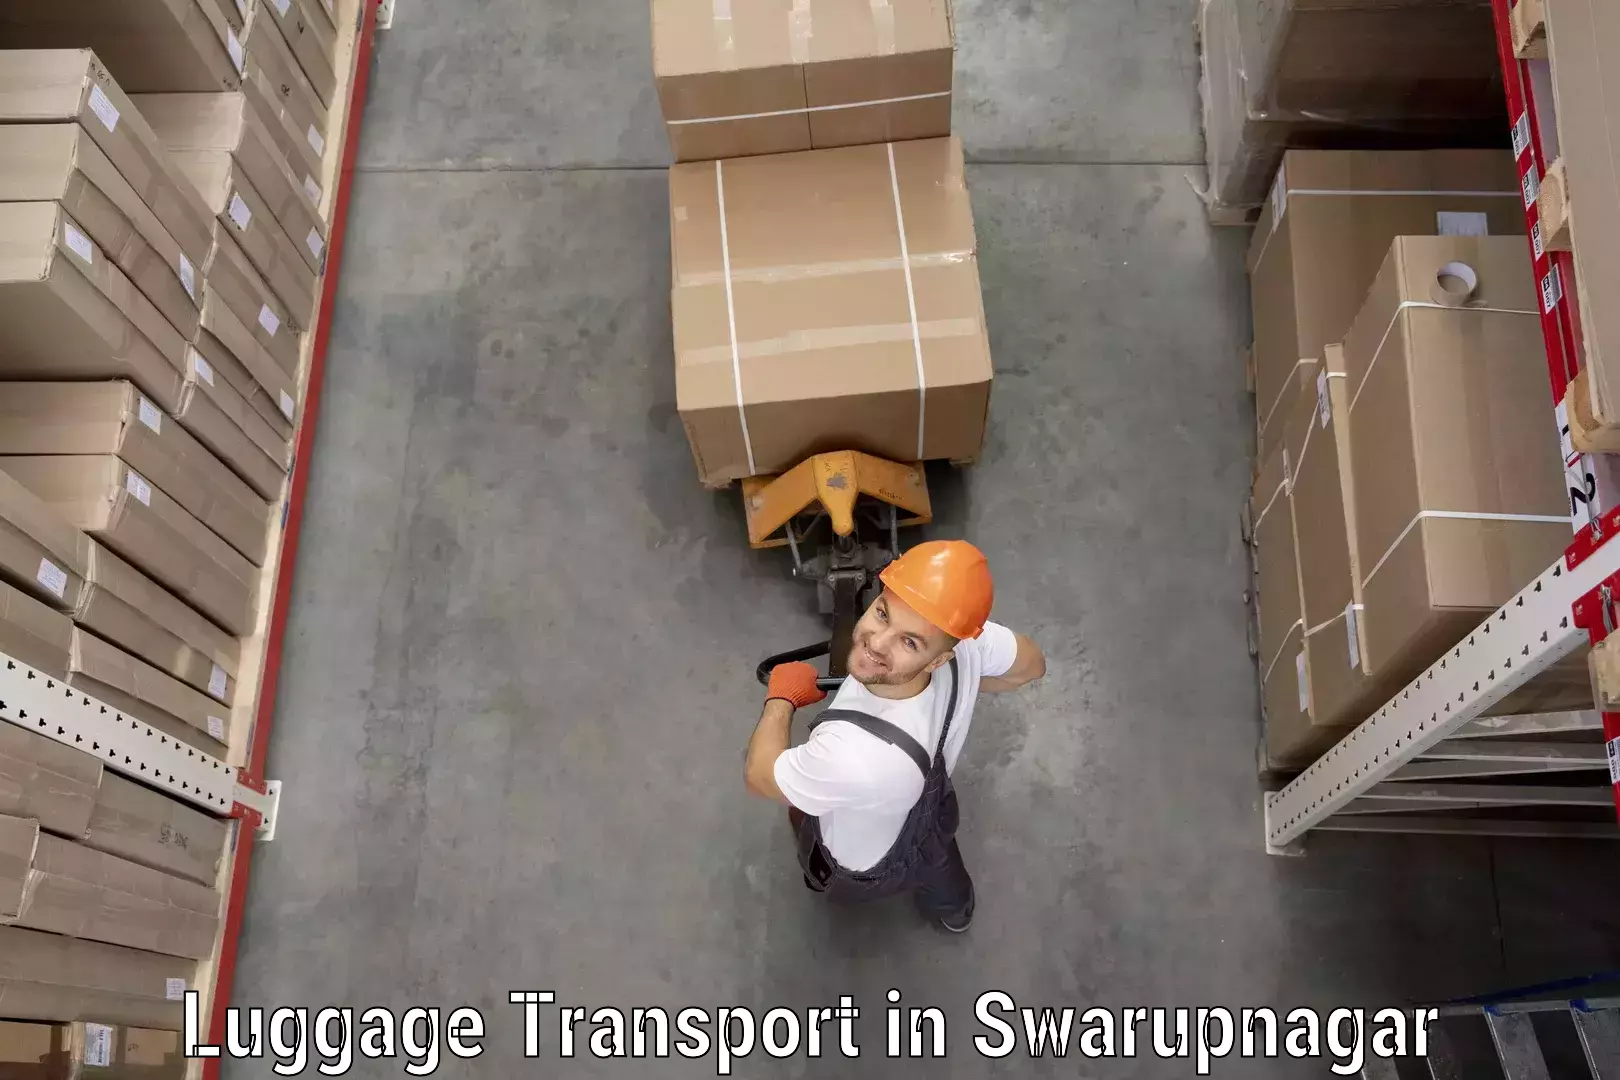 Luggage delivery operations in Swarupnagar